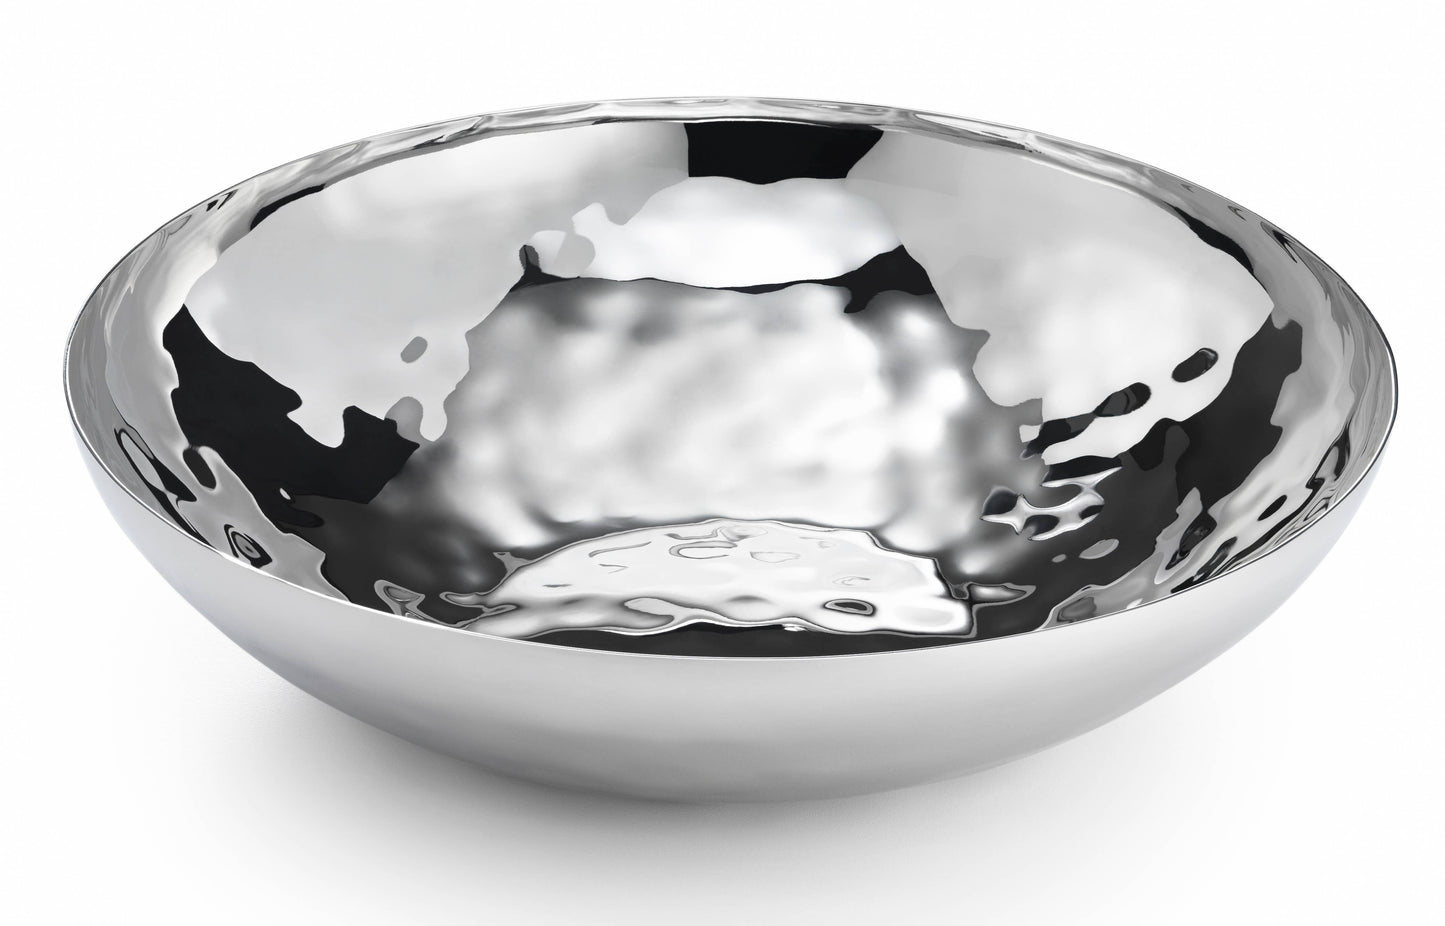 Mary Jurek Design Inc - Luna Round Serving Bowl- Non-Breakable Stainless